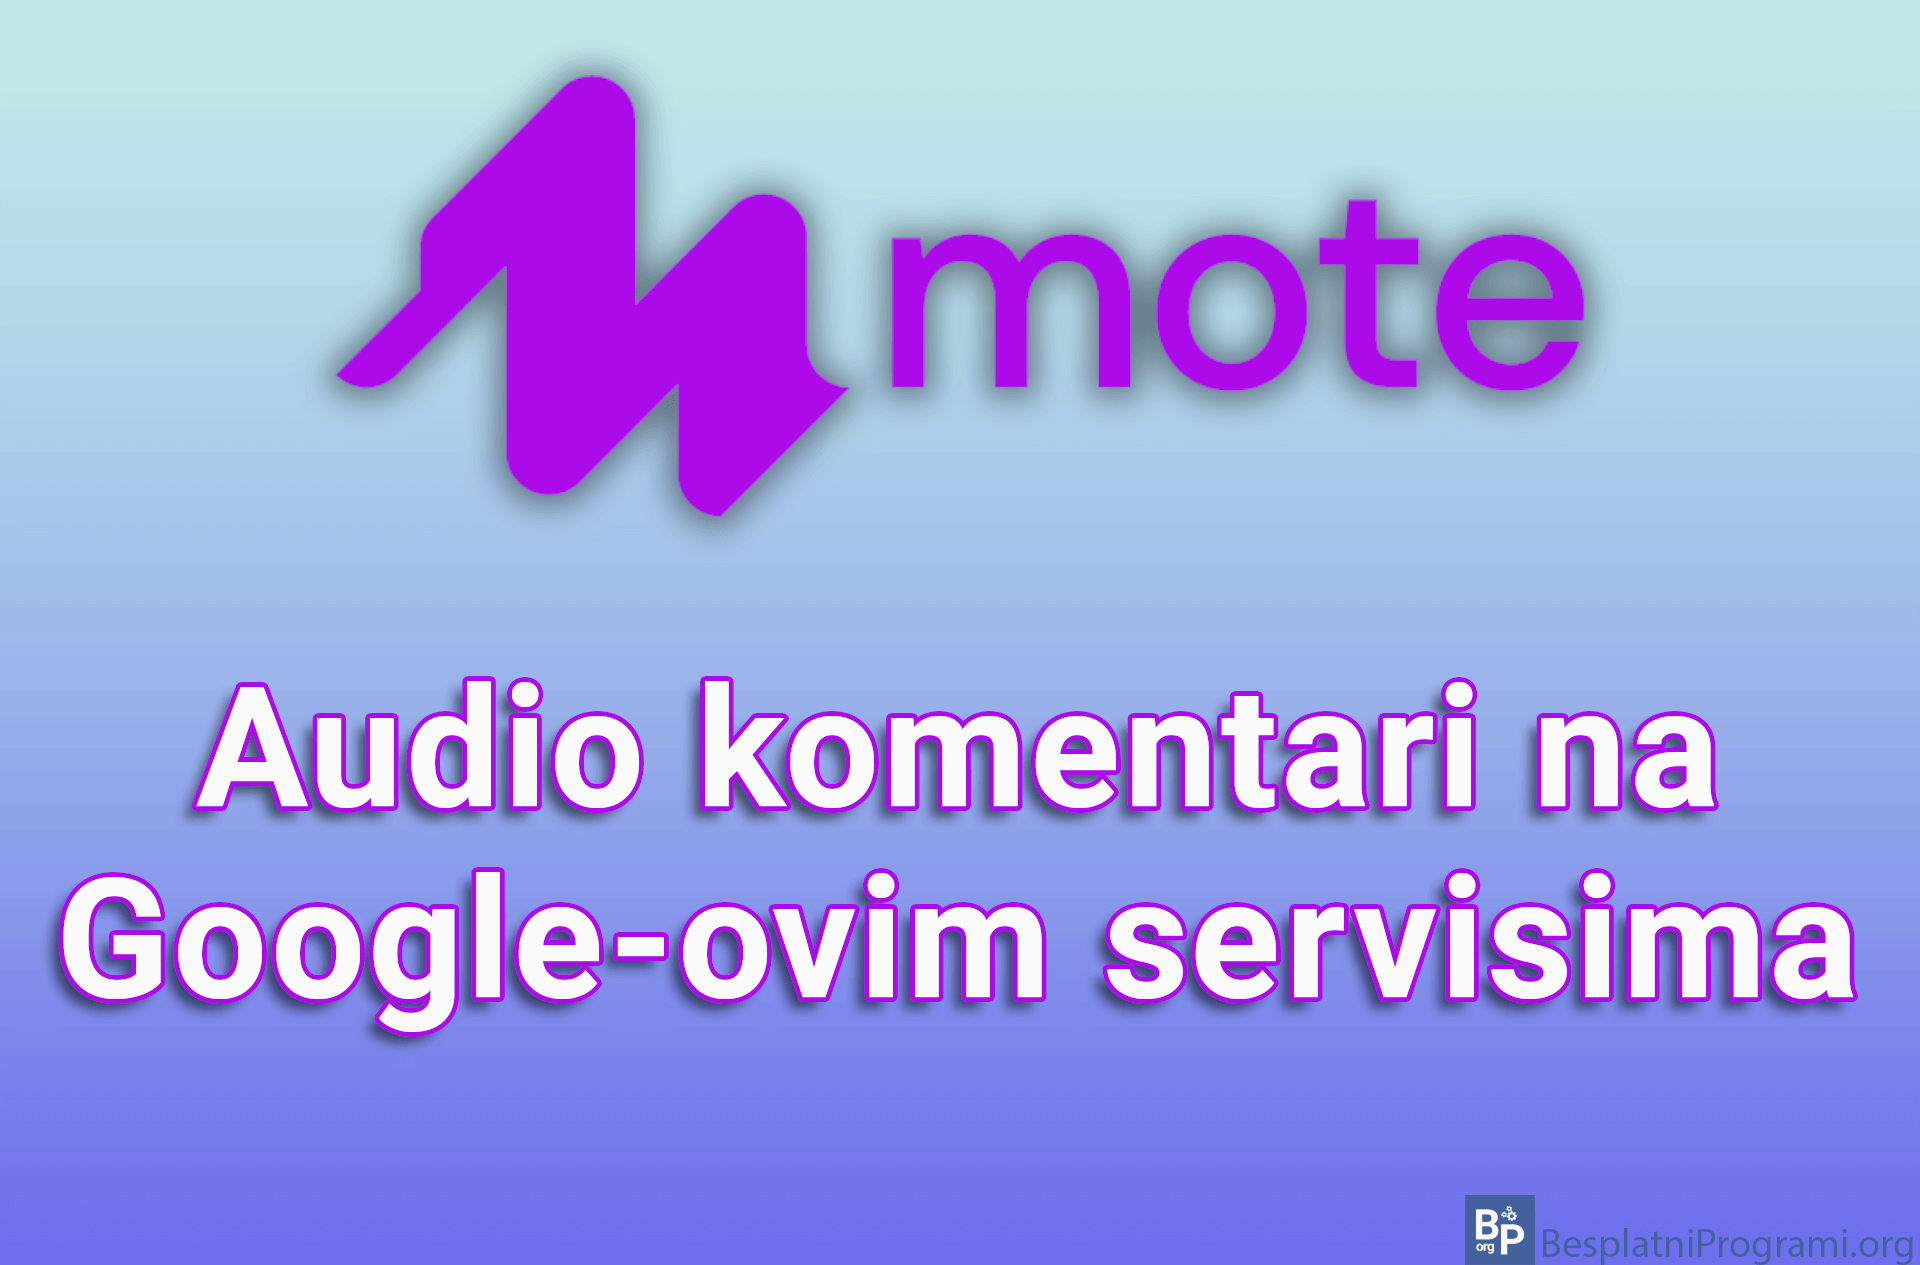 Mote – Audio komentari na Google-ovim servisima